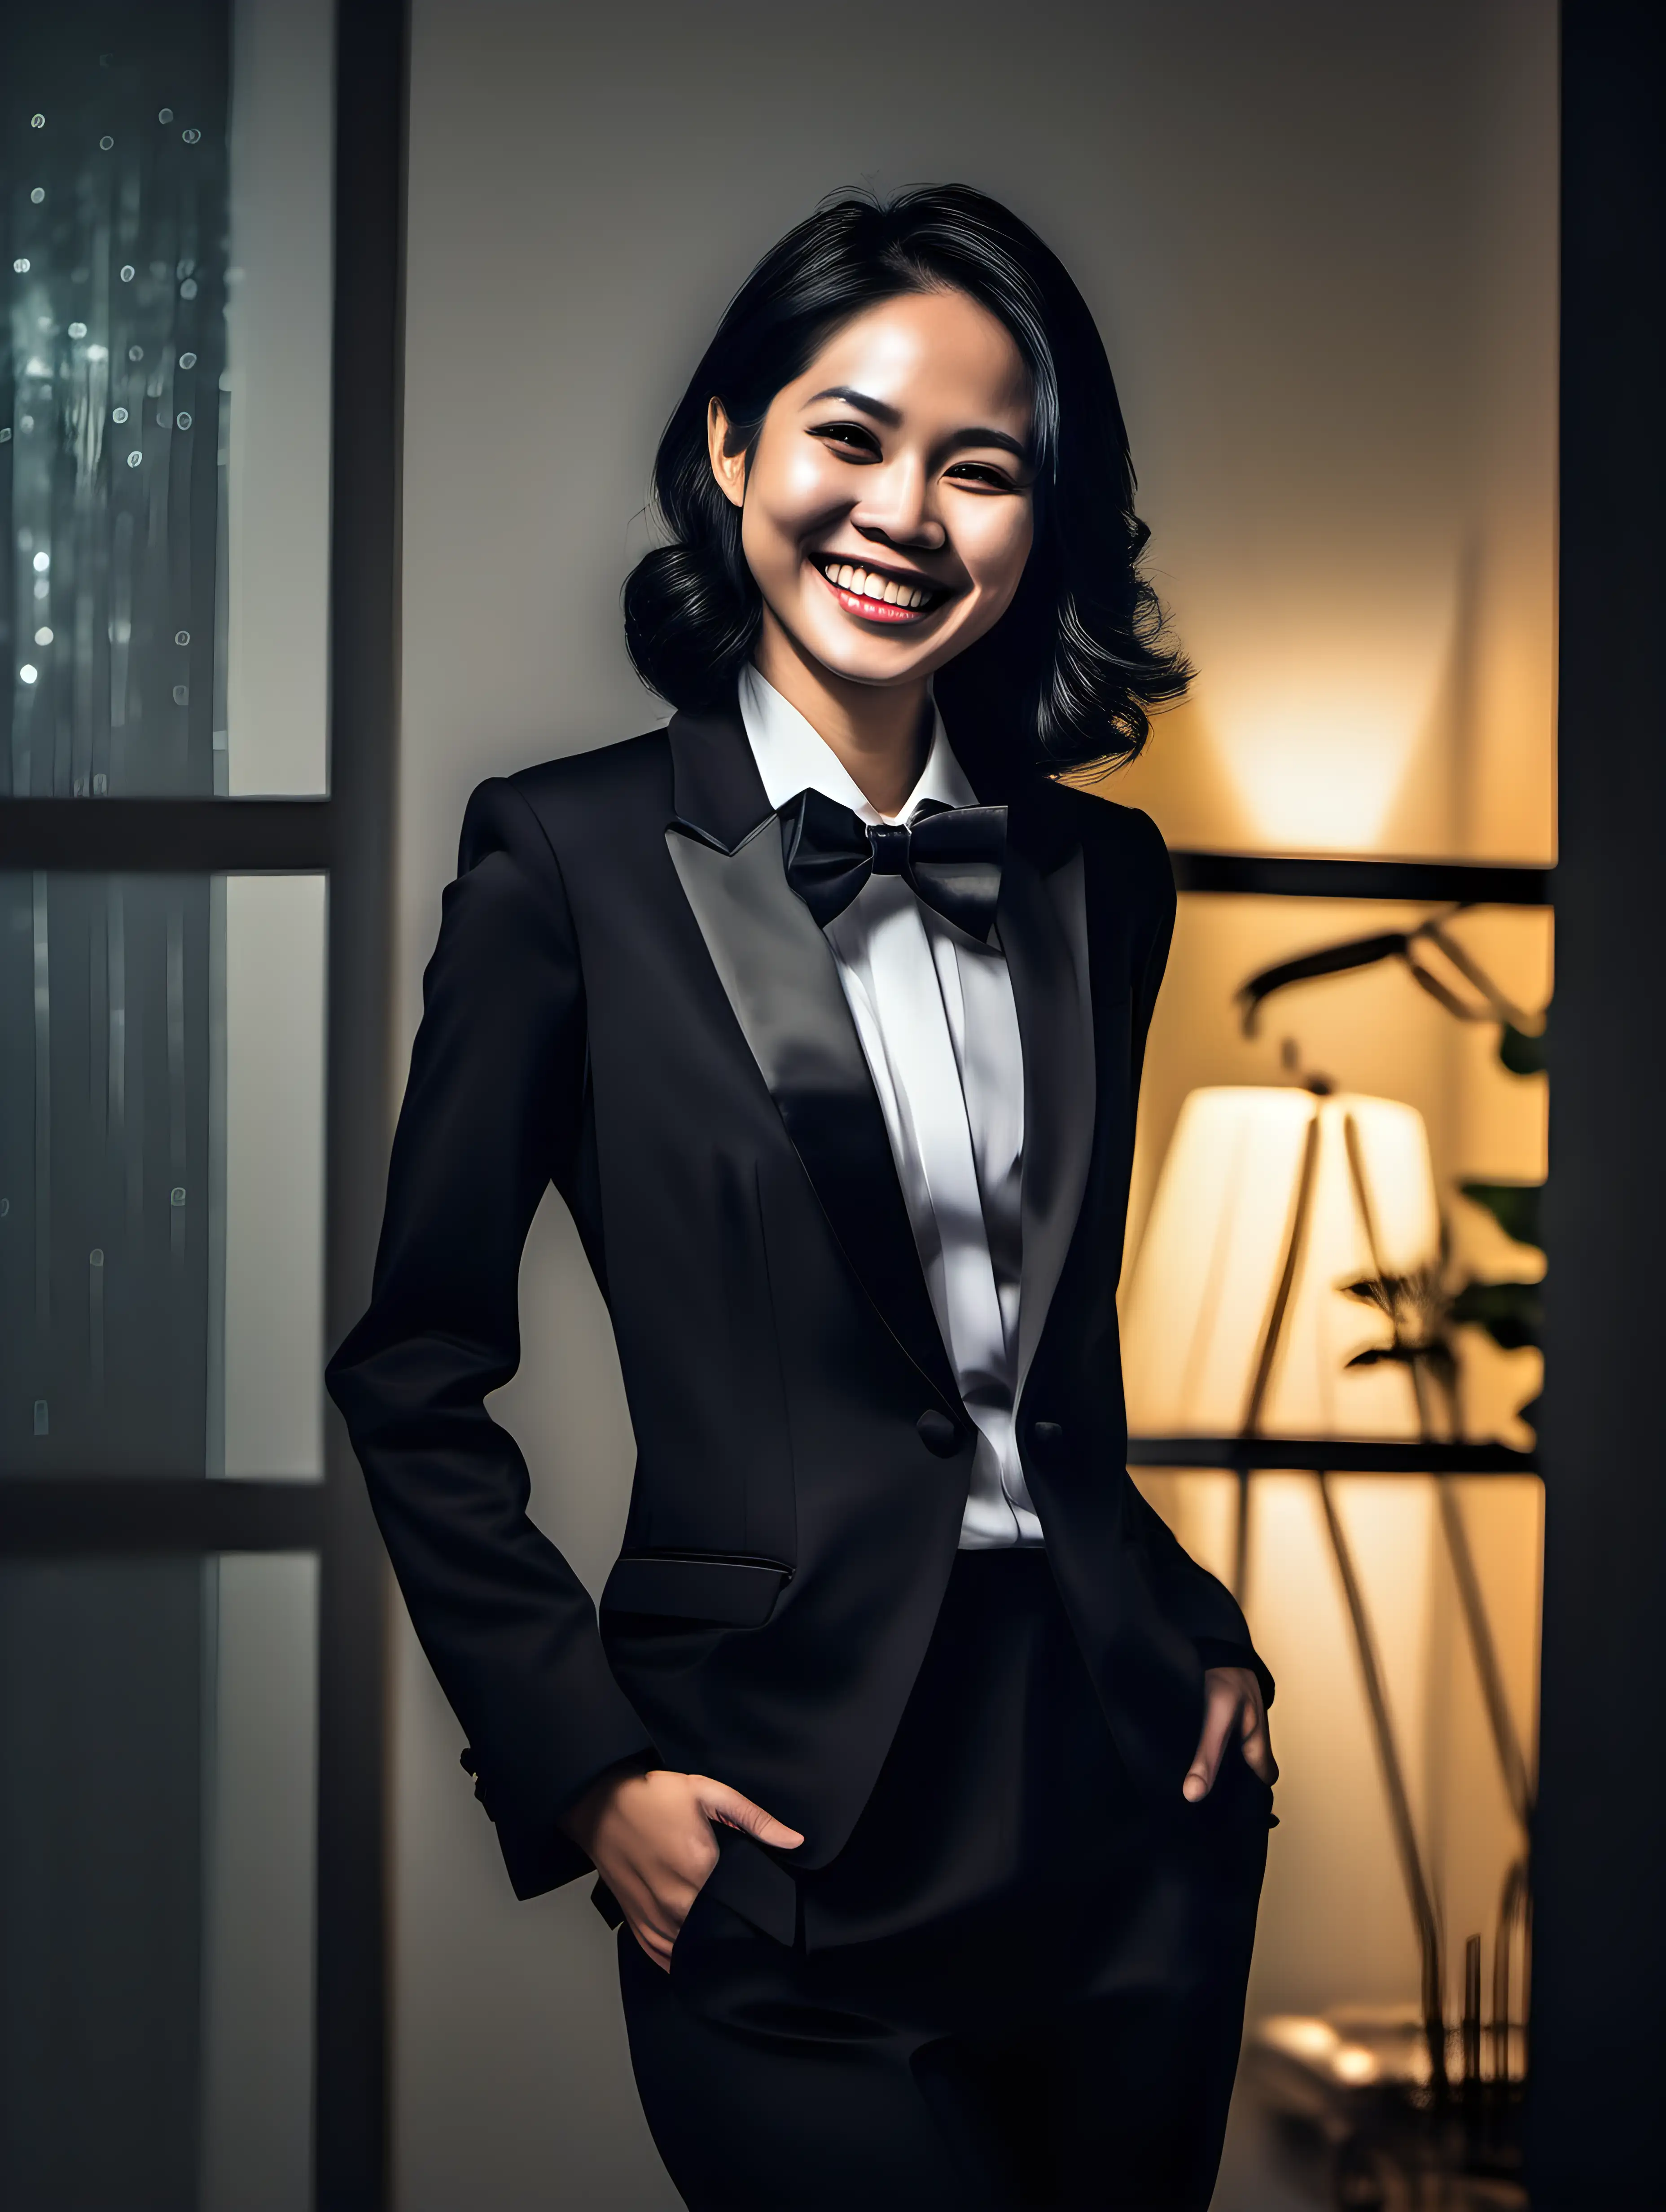 Stylish-Vietnamese-Woman-in-Open-Tuxedo-Smiling-in-Nighttime-Ambiance